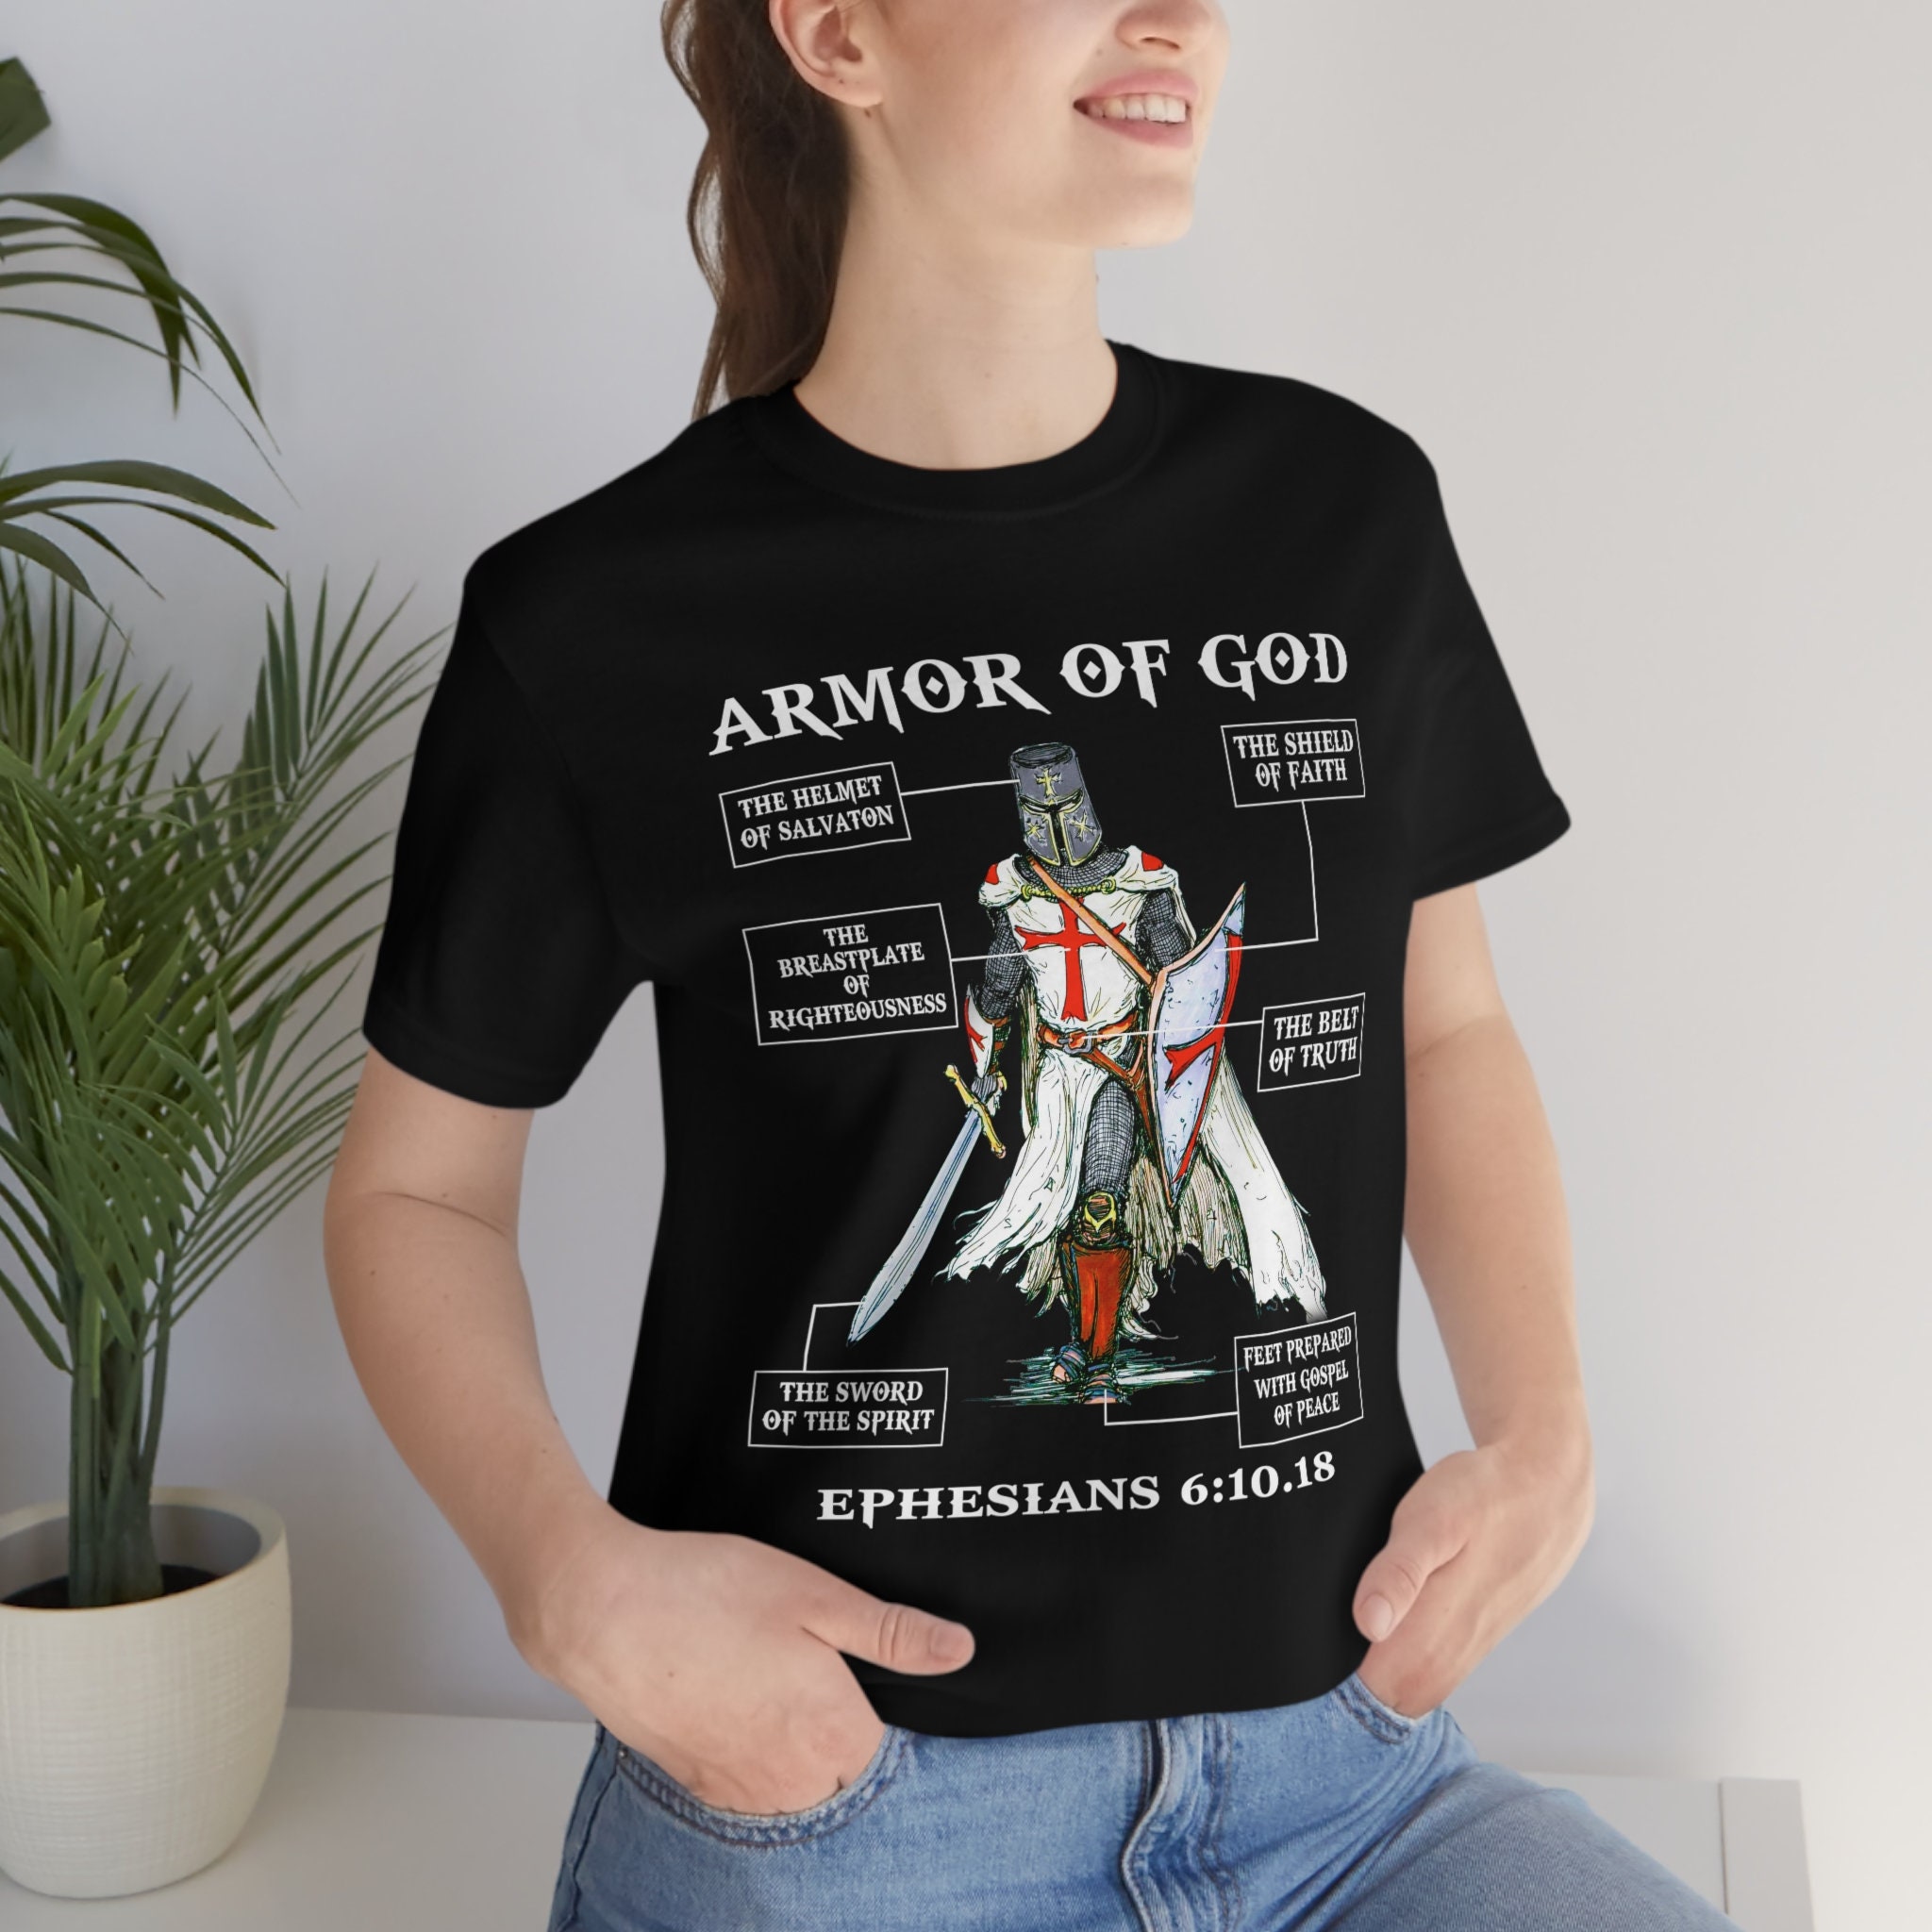 Armor of God T Shirt - Etsy